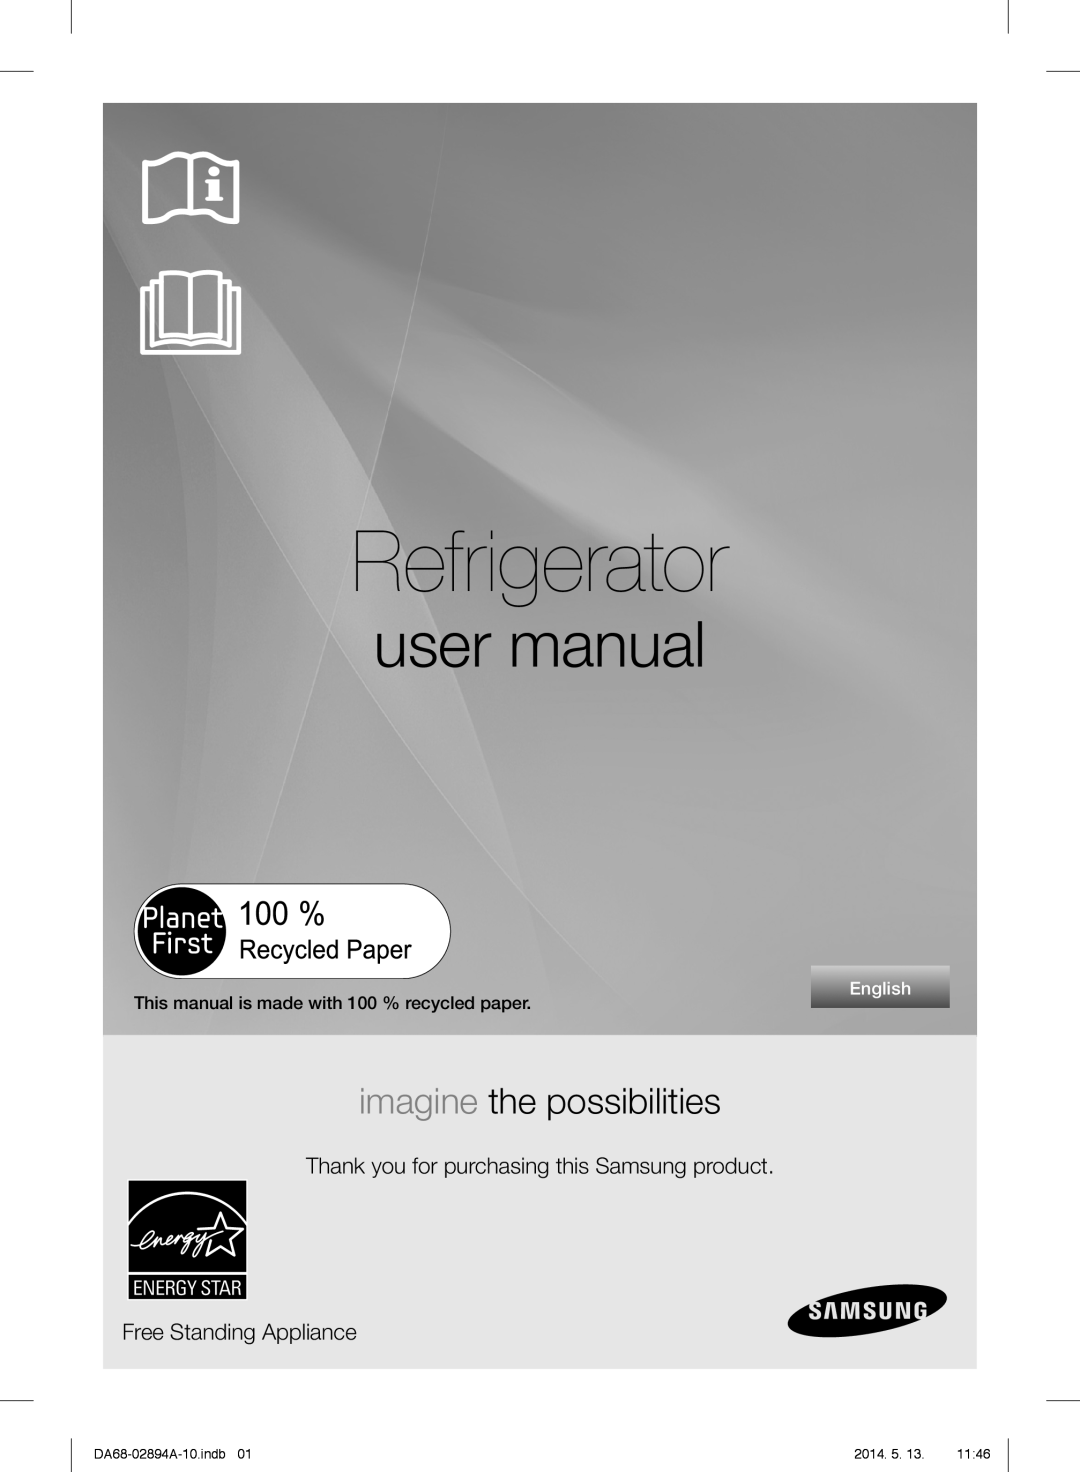 Samsung RF31FMESBSR user manual Refrigerator, imagine the possibilities, Samsung, Free Standing Appliance, English 